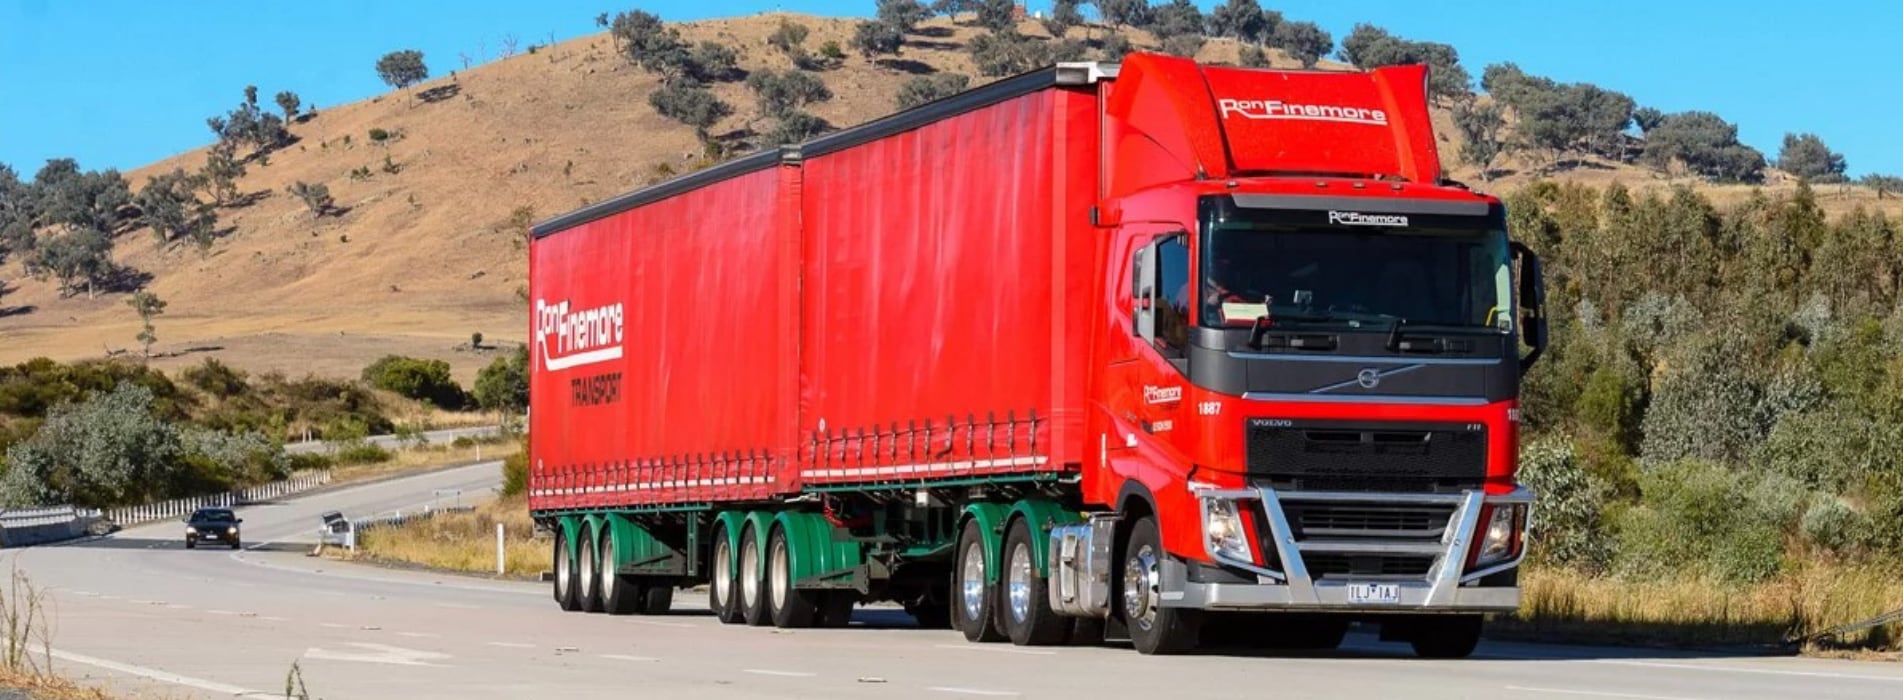 truck partners deliver